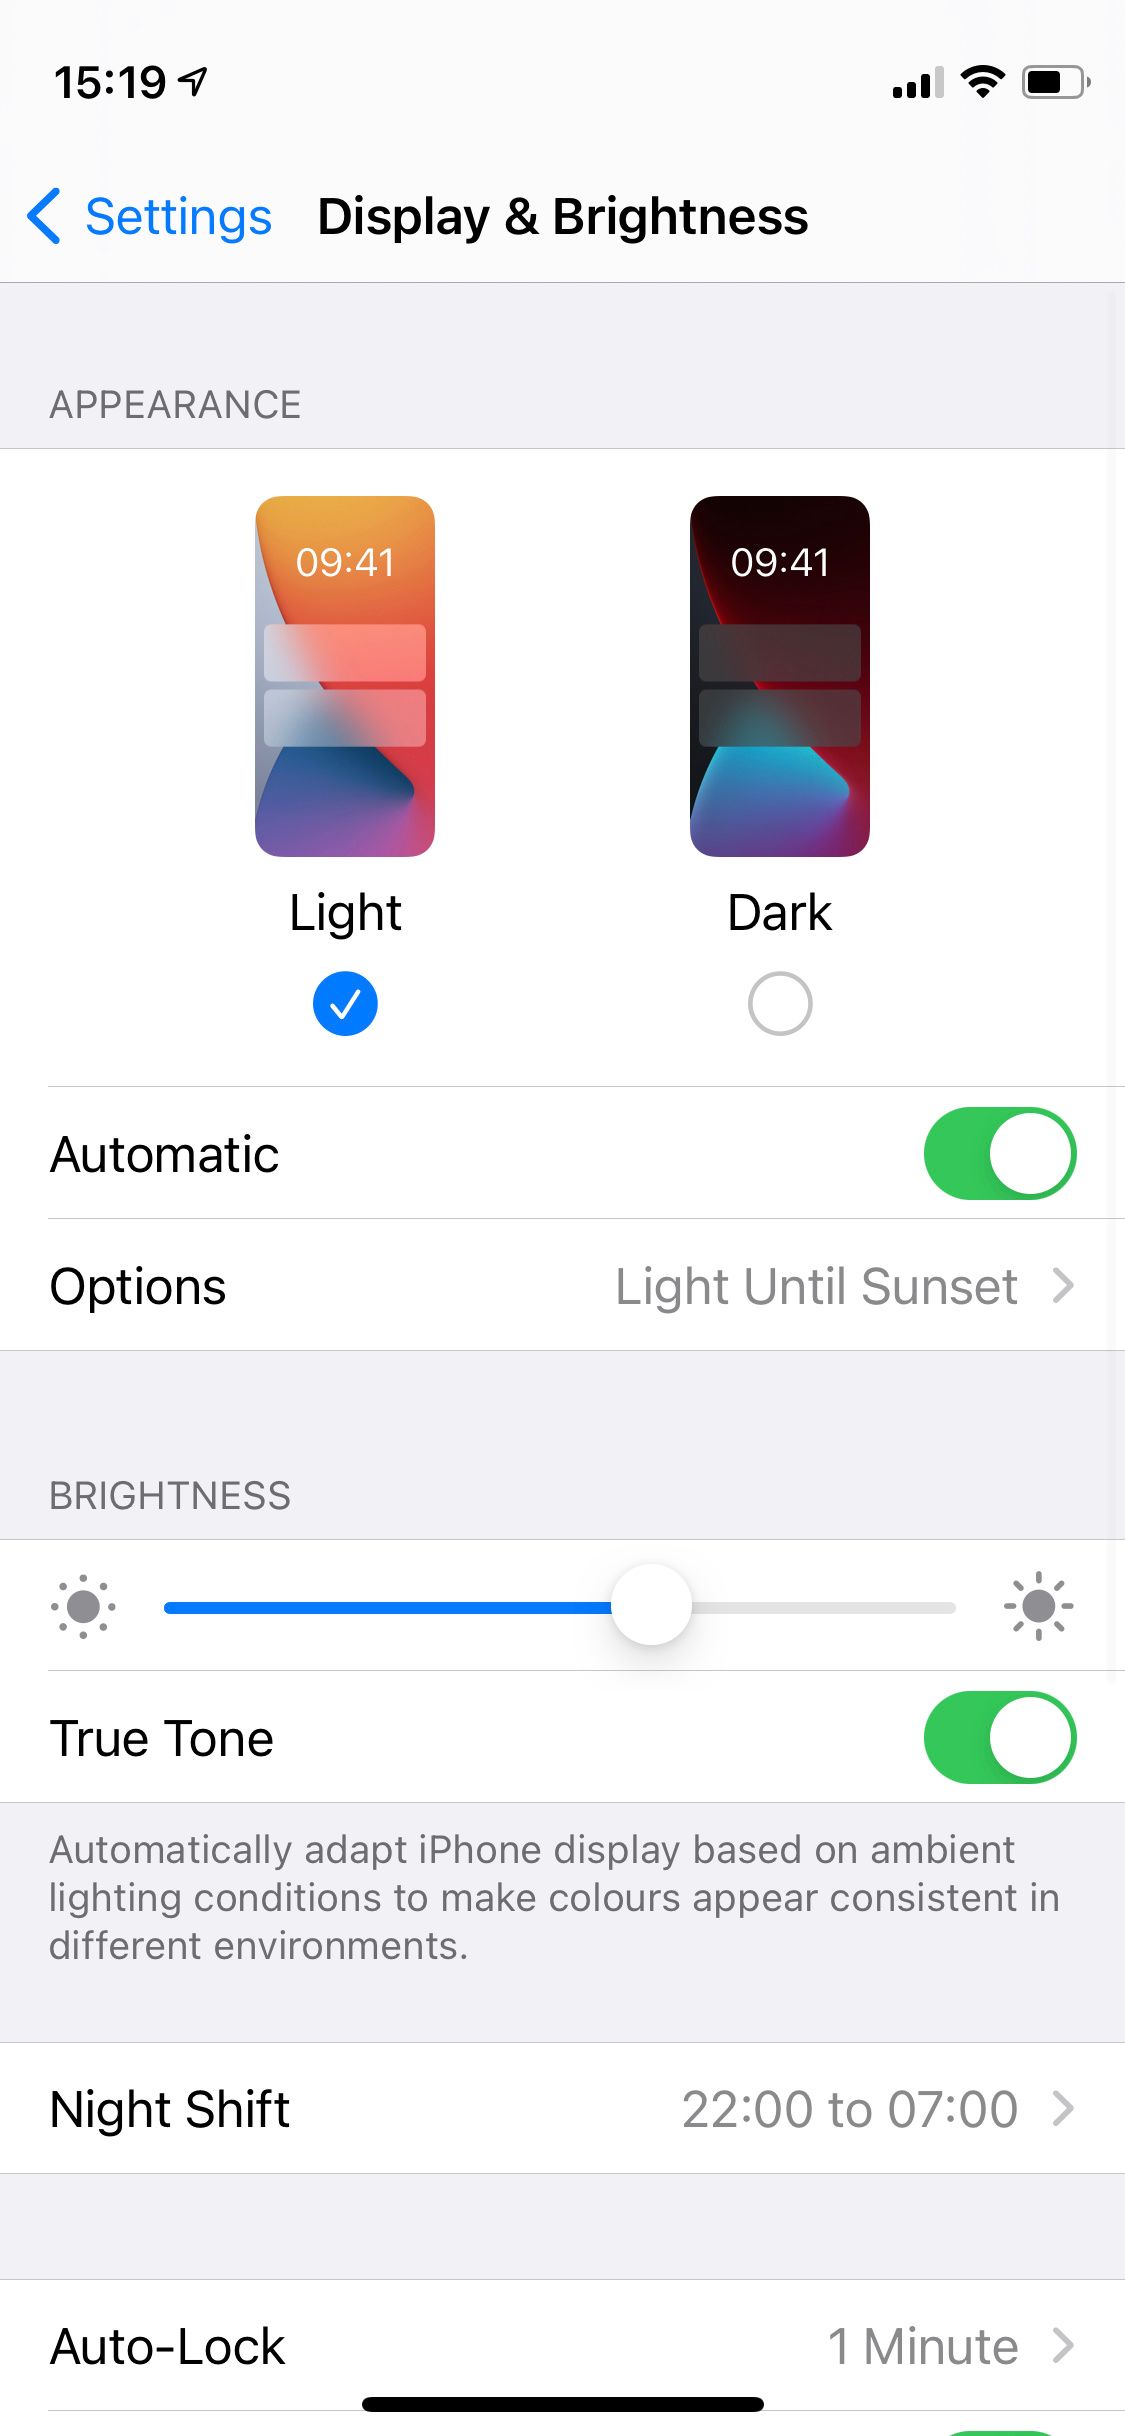 Display & Brightness settings for iPhone